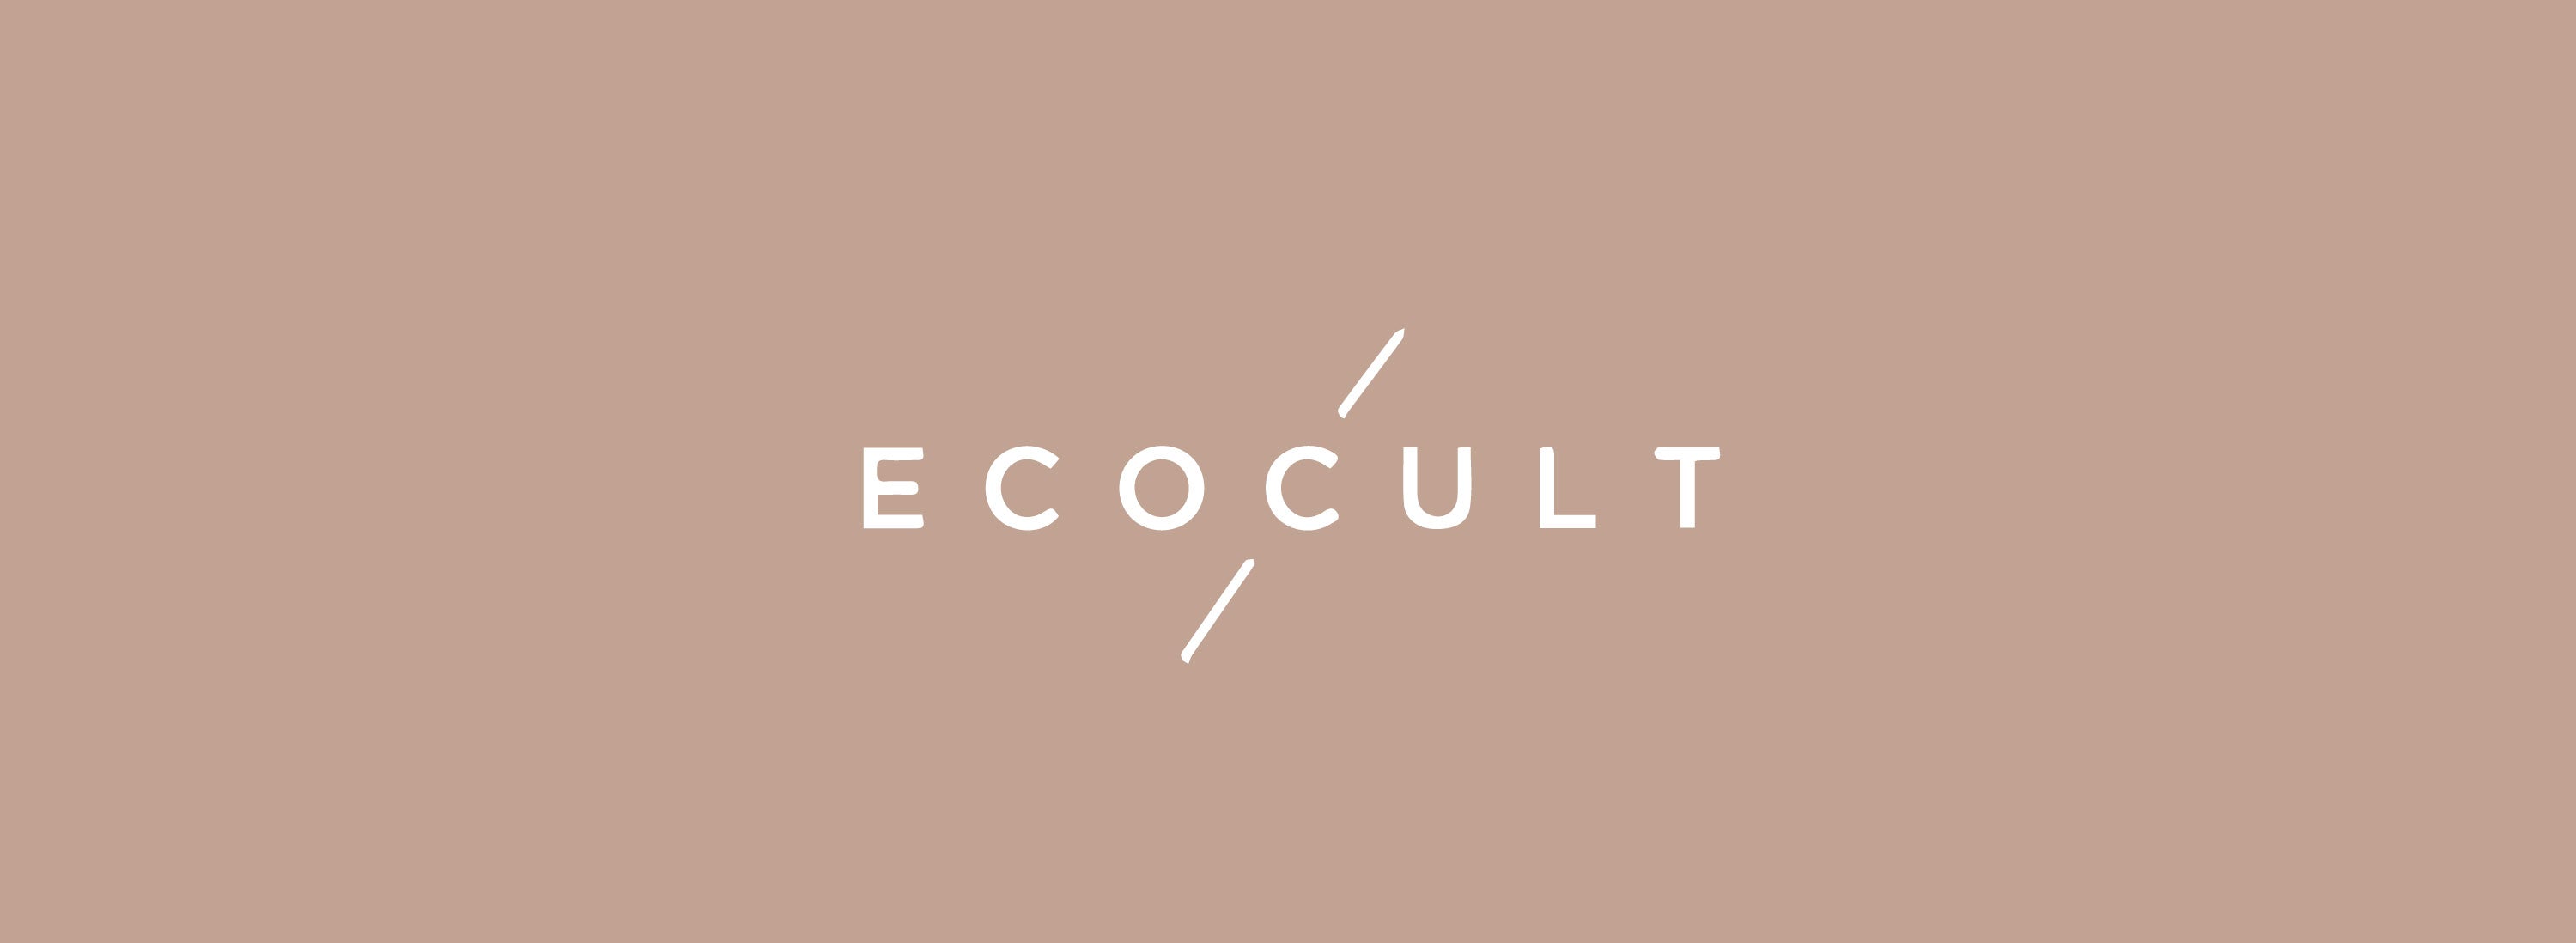 Ecocult Editorial by Editor Alden Wicker